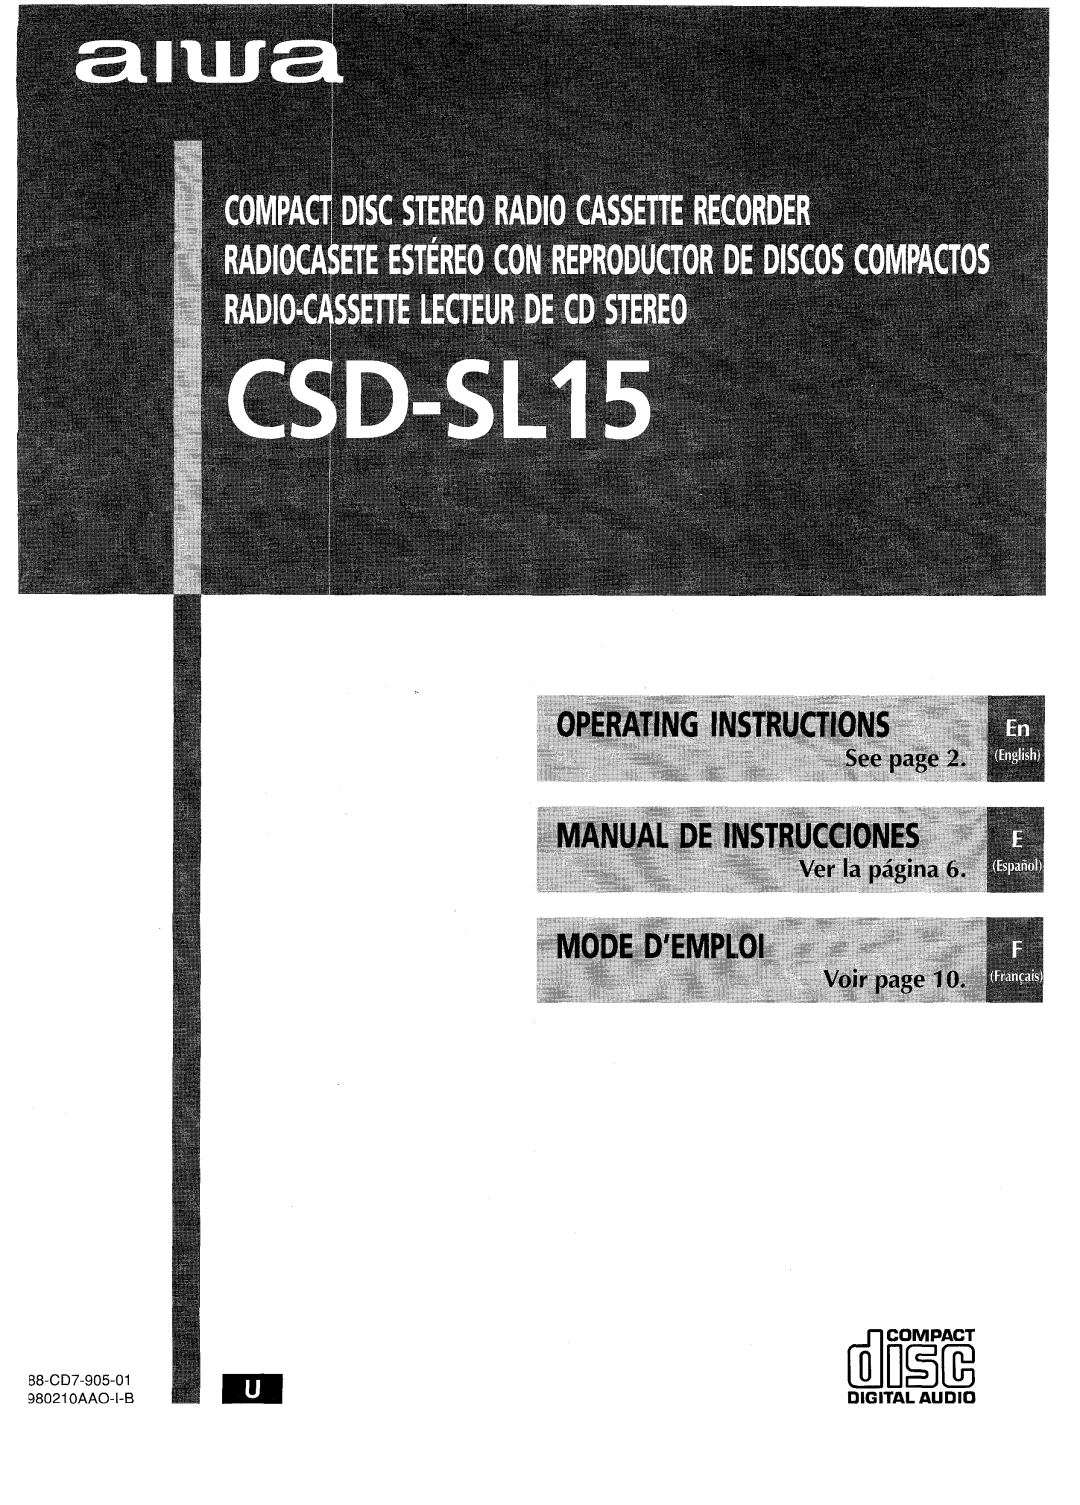 Aiwa CSD-SL15 manual m3iE, Digital Audio 